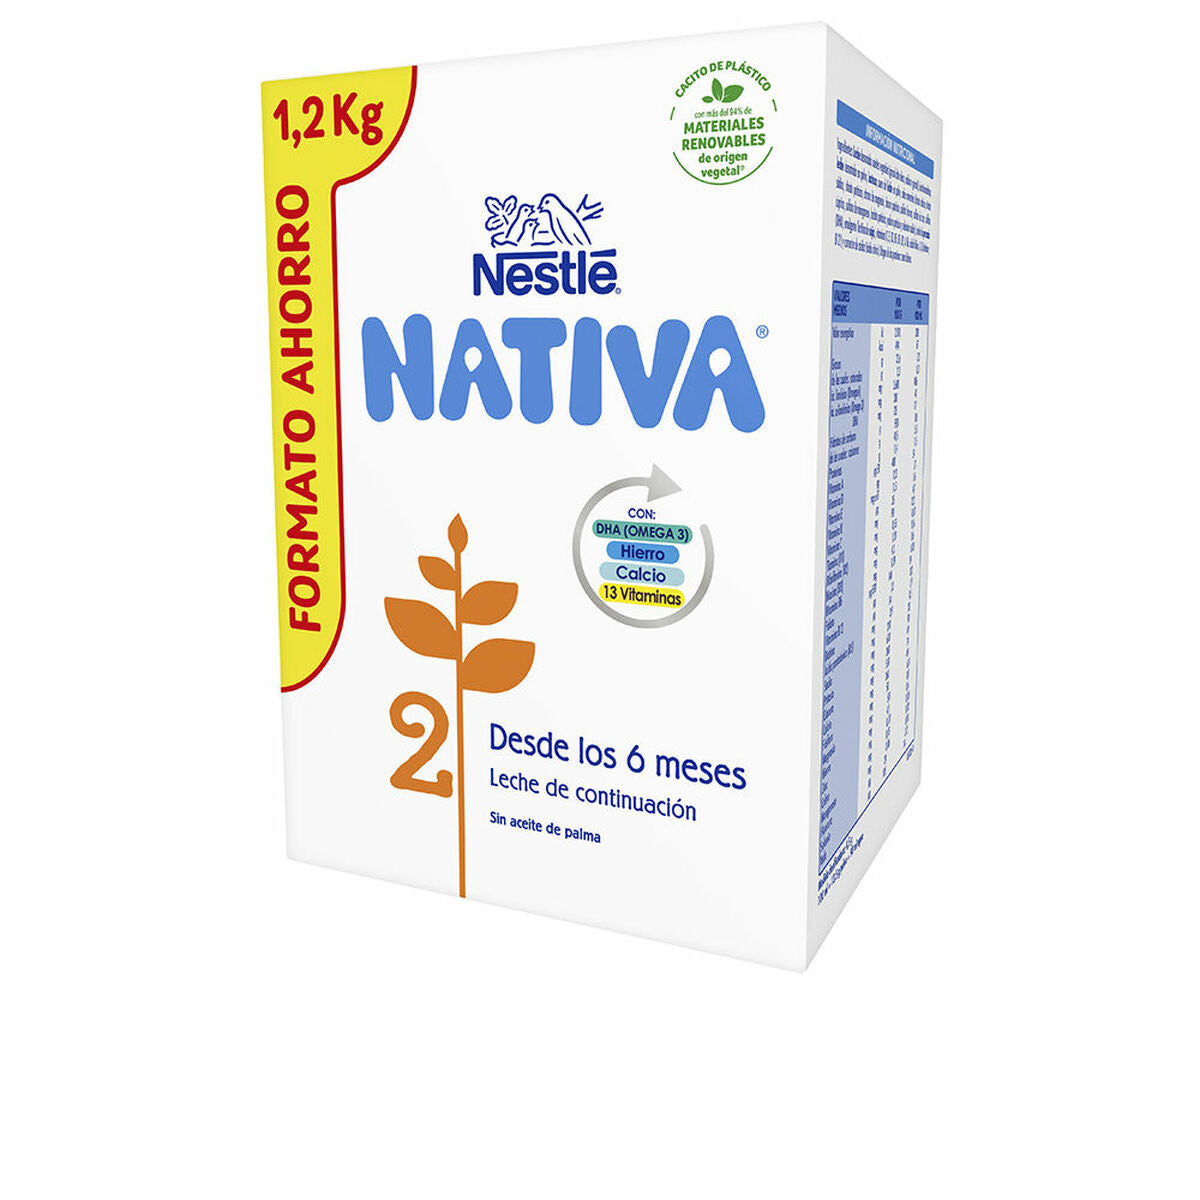 Melkpoeder Nestlé Nativa Nativa2 1,2 kg